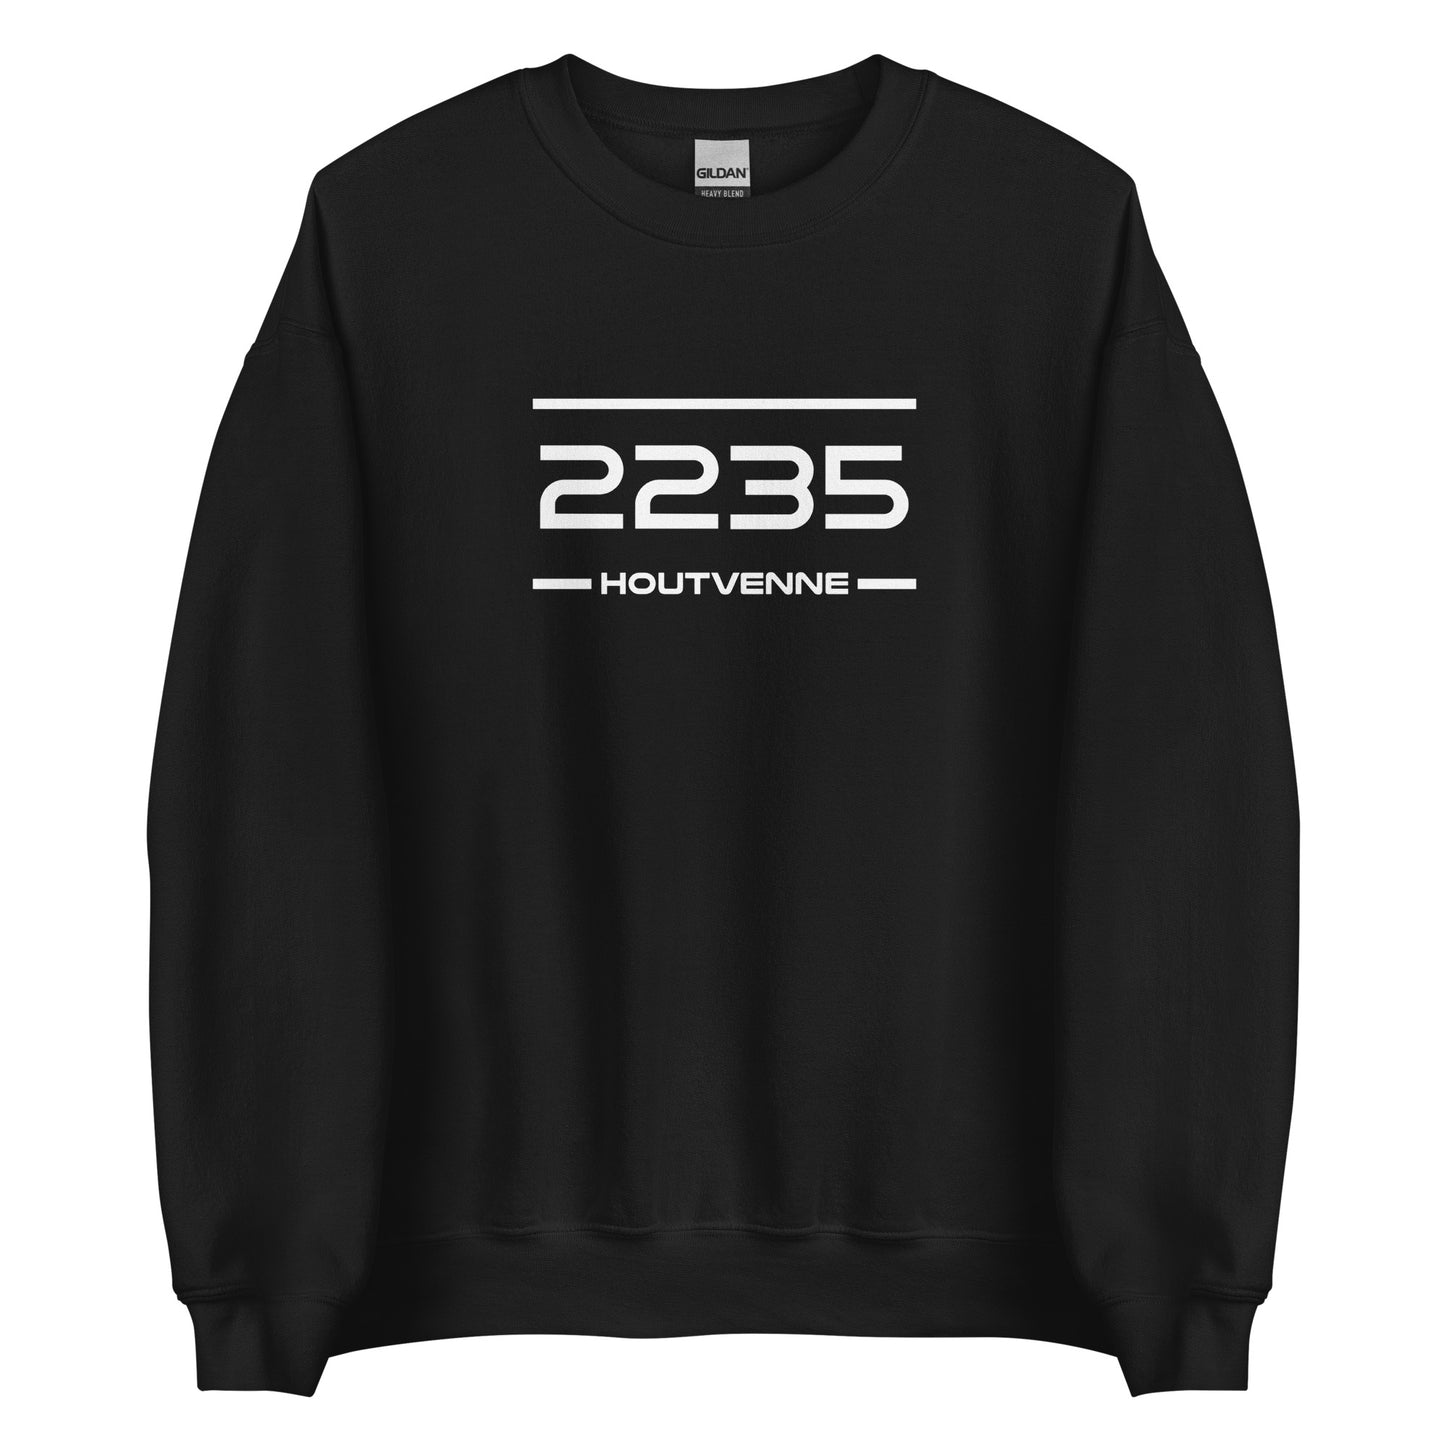 Sweater - 2235 - Houtvenne (M/V)